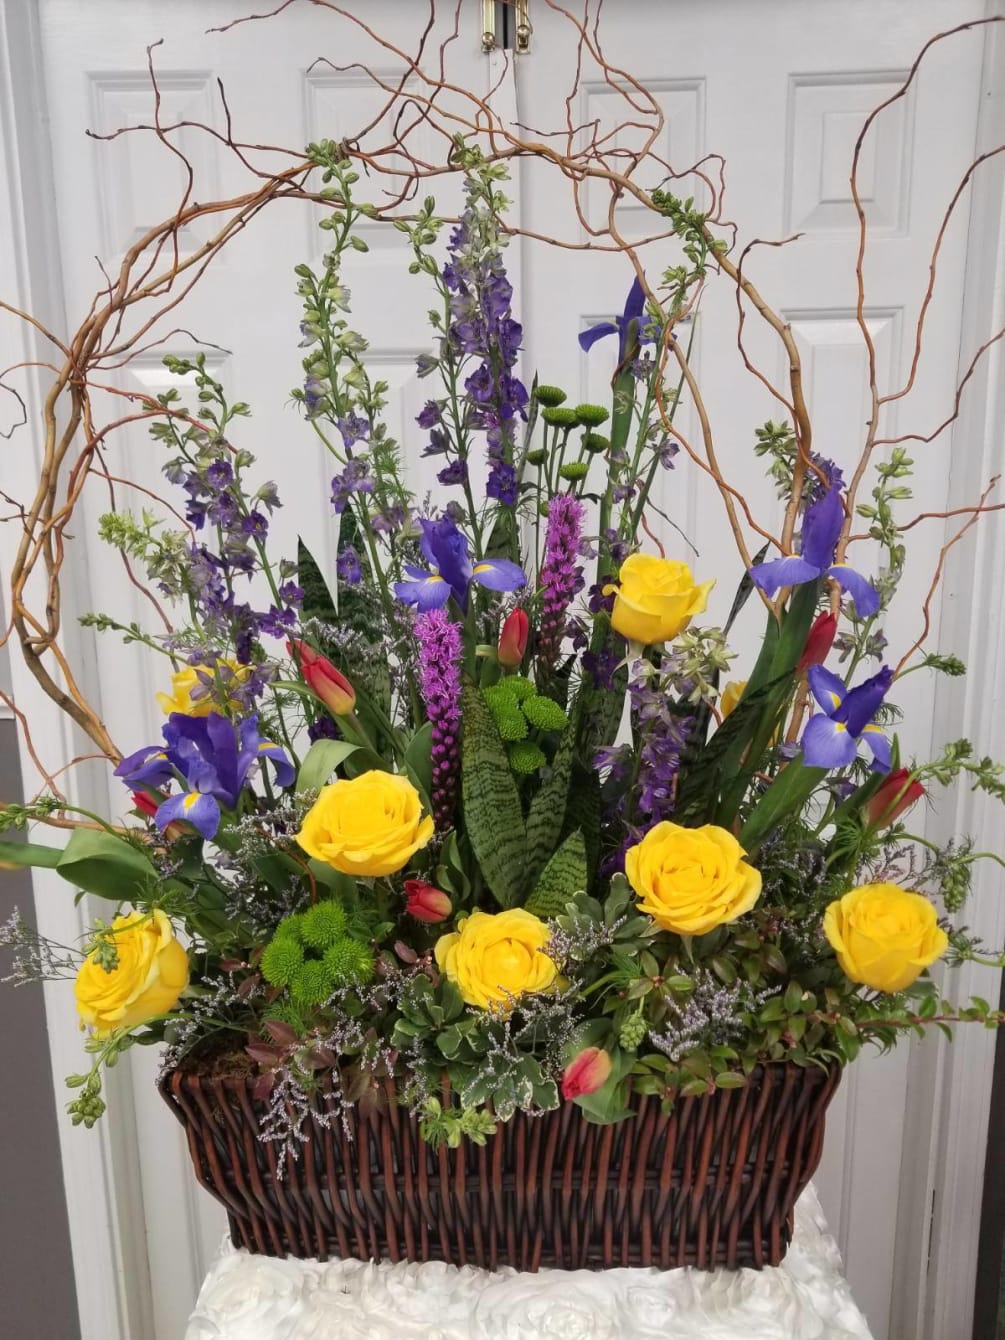 The Willow Garden Arrangement includes Liatris, Delphinium, Roses, Buttons, Tulips, Iris and